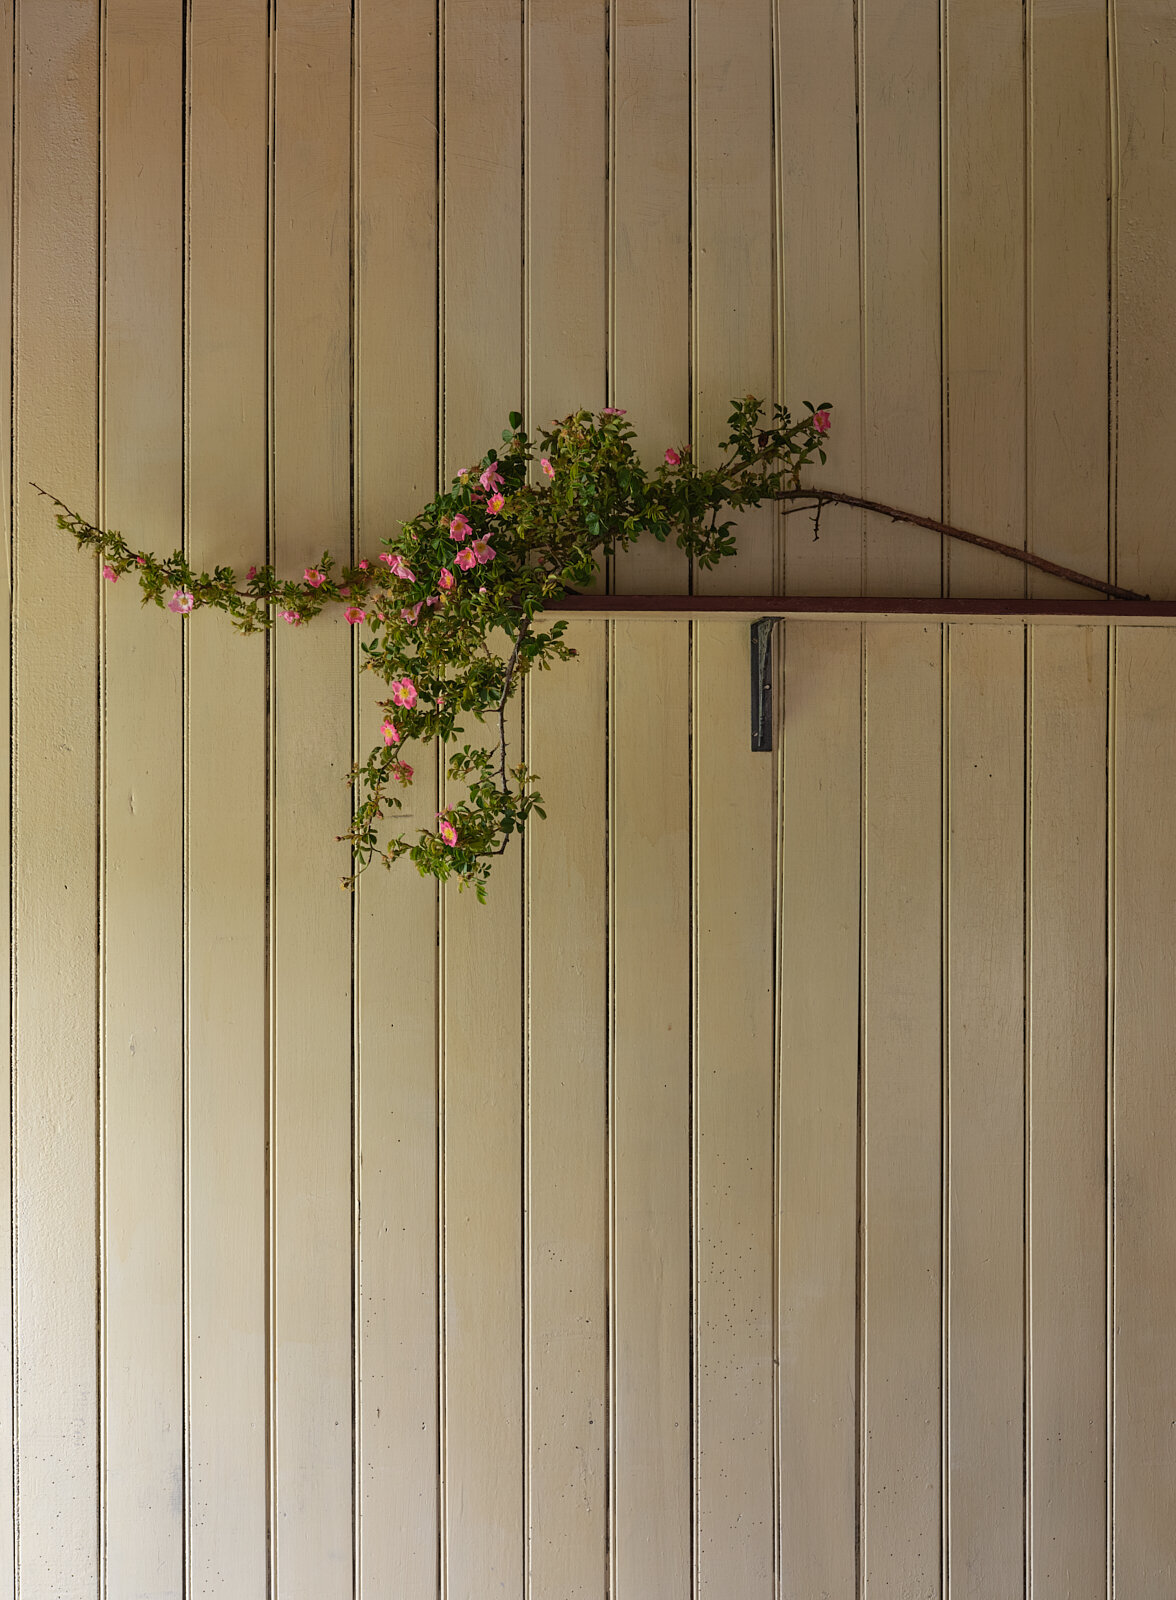   Briar Rose, Mitchell Cottage, Fruitlands Central Otago 2020. 570 x 415mm.  